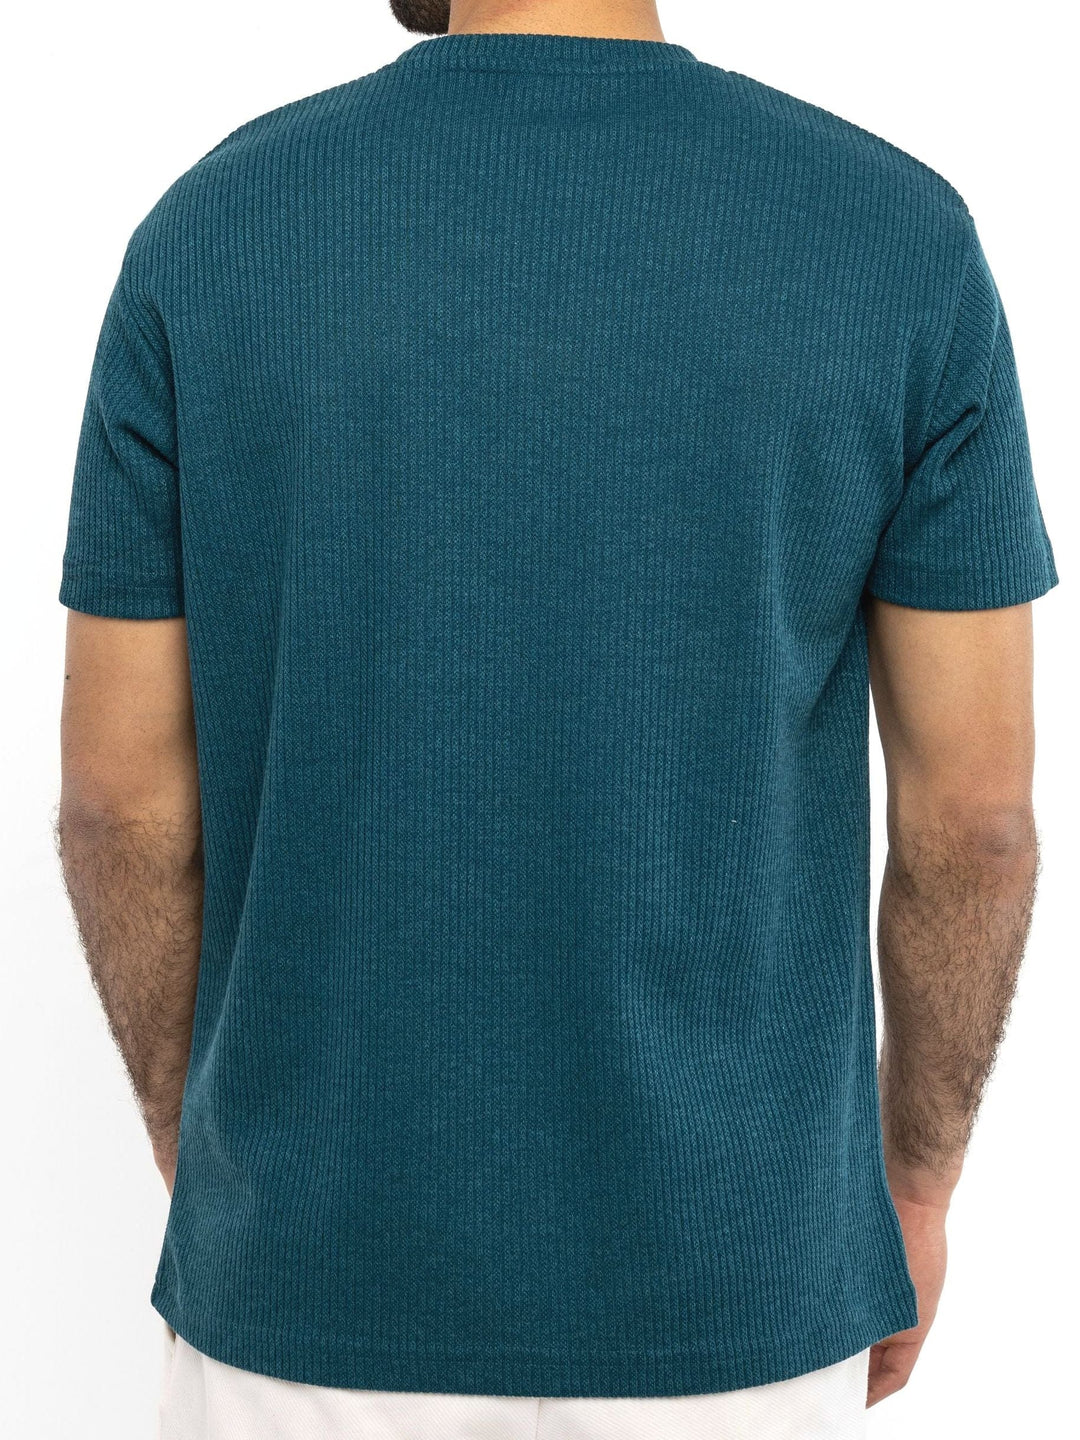 Zhivago Men Men T-shirt Teal Blue Ribbed Knit T-Shirt